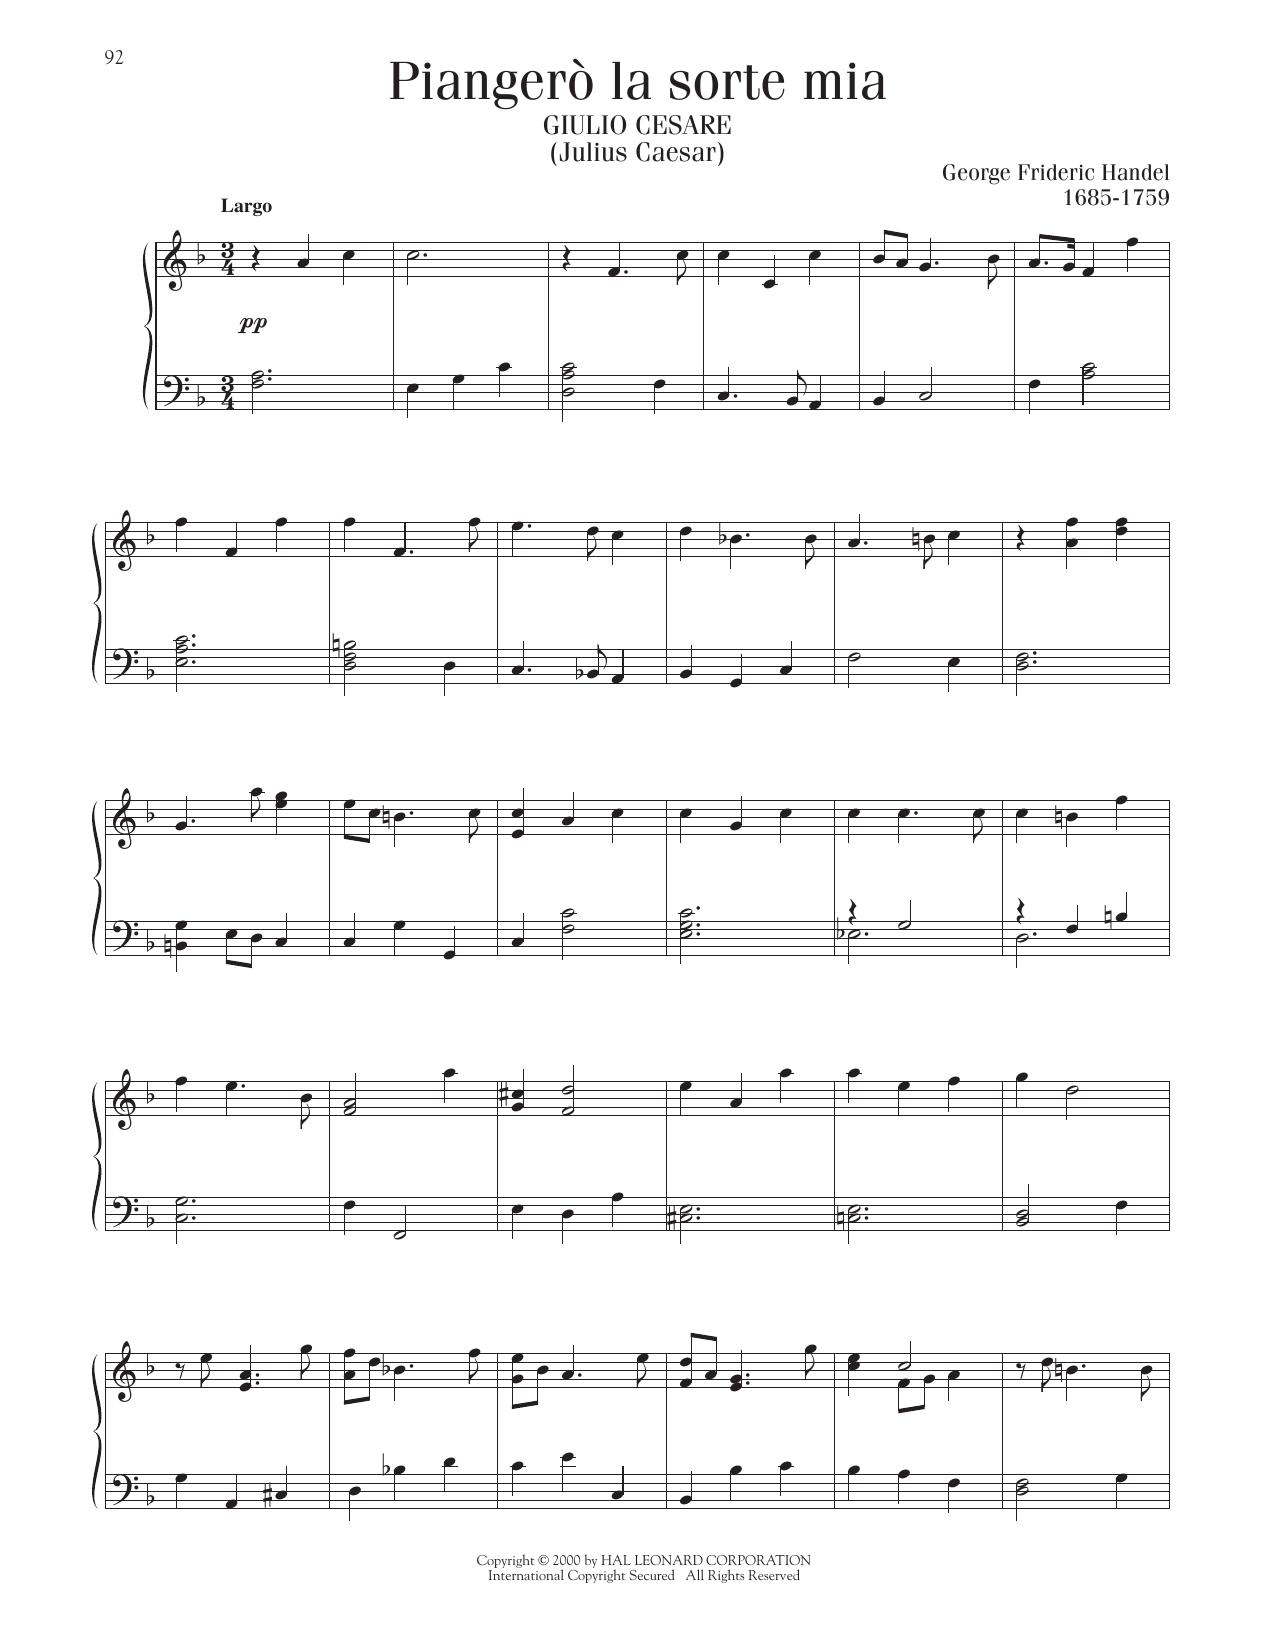 George Frideric Handel Piangero La Sorte Mia Sheet Music Notes & Chords for Piano Solo - Download or Print PDF